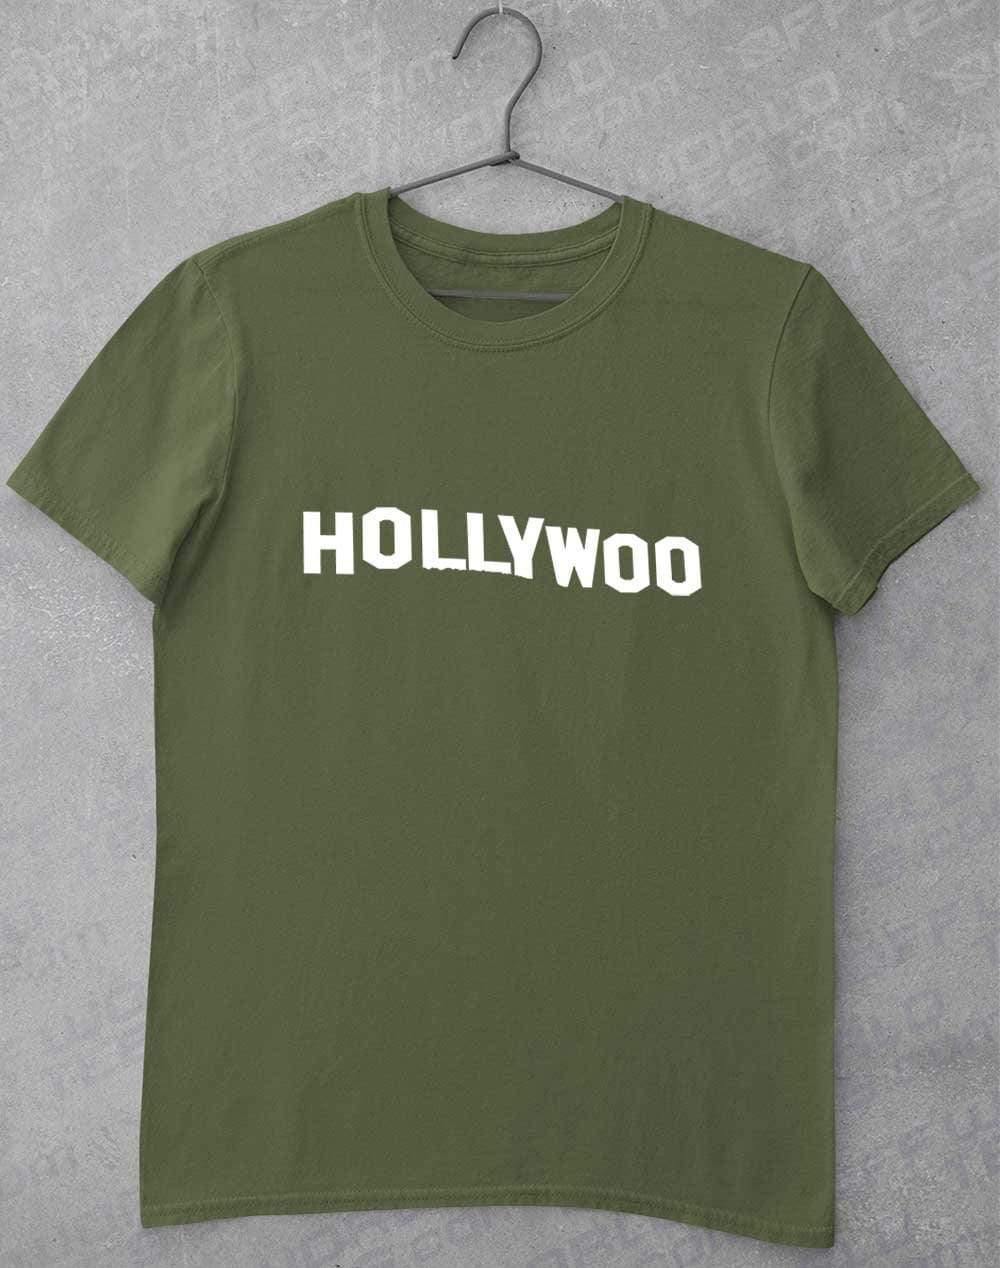 Hollywoo Sign T-Shirt S / Military Green  - Off World Tees